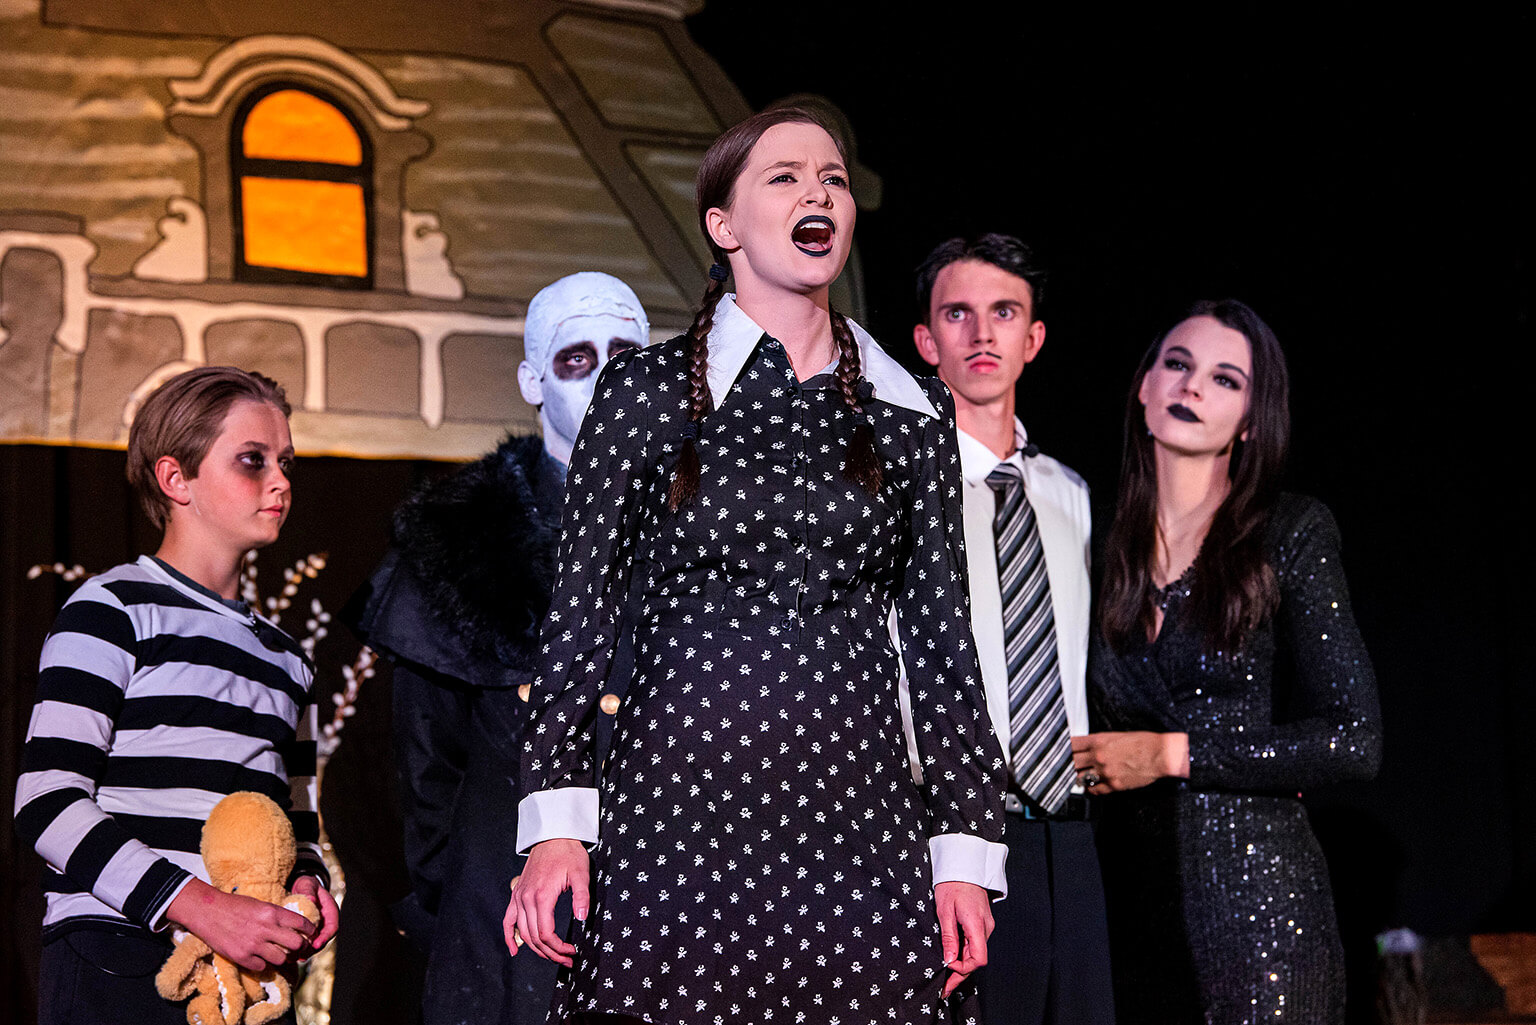 Addams Family musical